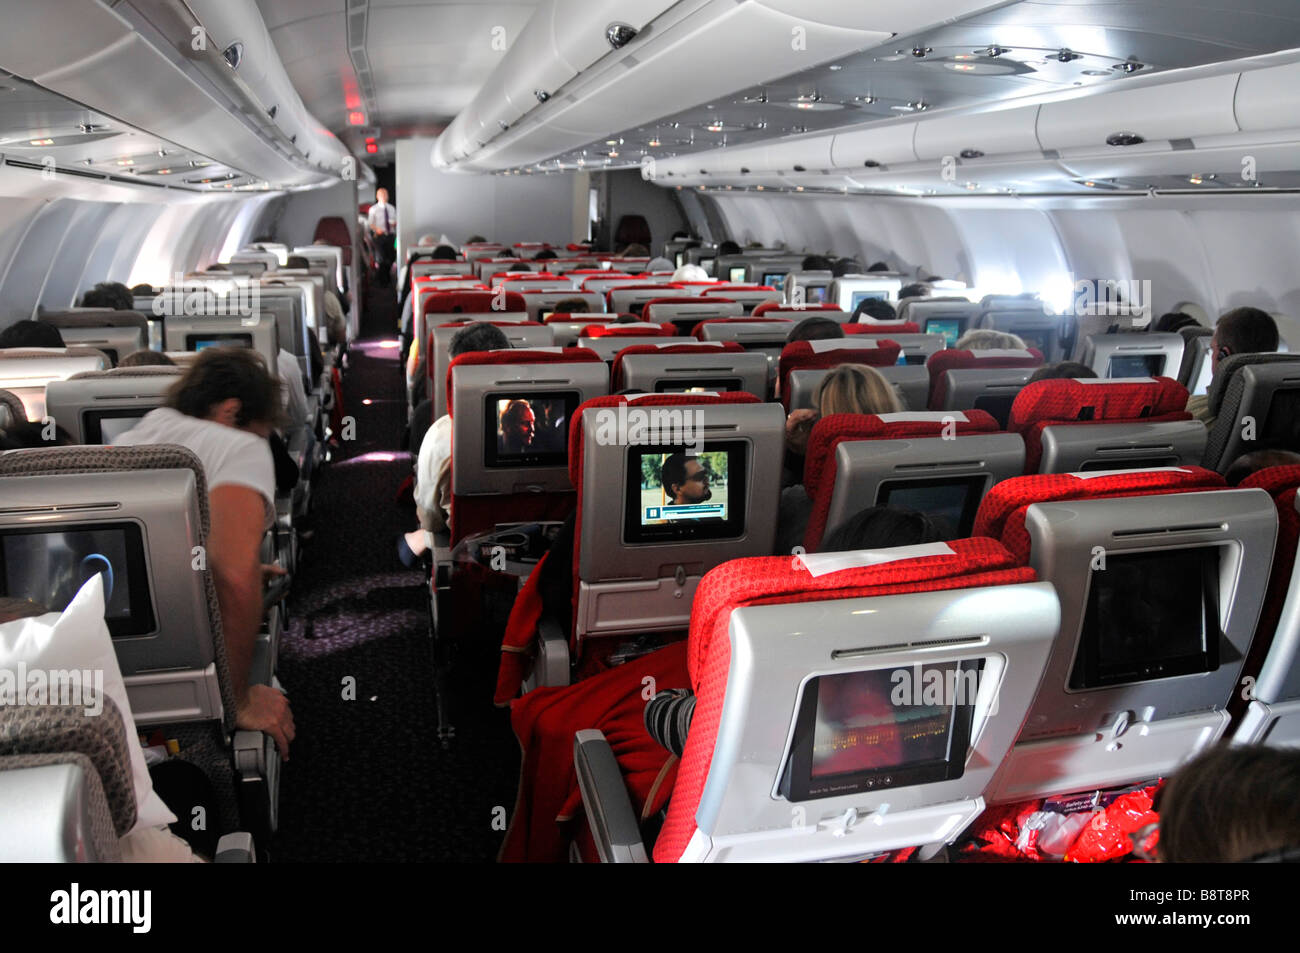 Travel by passenger plane interiors Virgin Atlantic Airbus jet airplane cabin passengers inflight TV entertainment movie film screen on back of seats Stock Photo